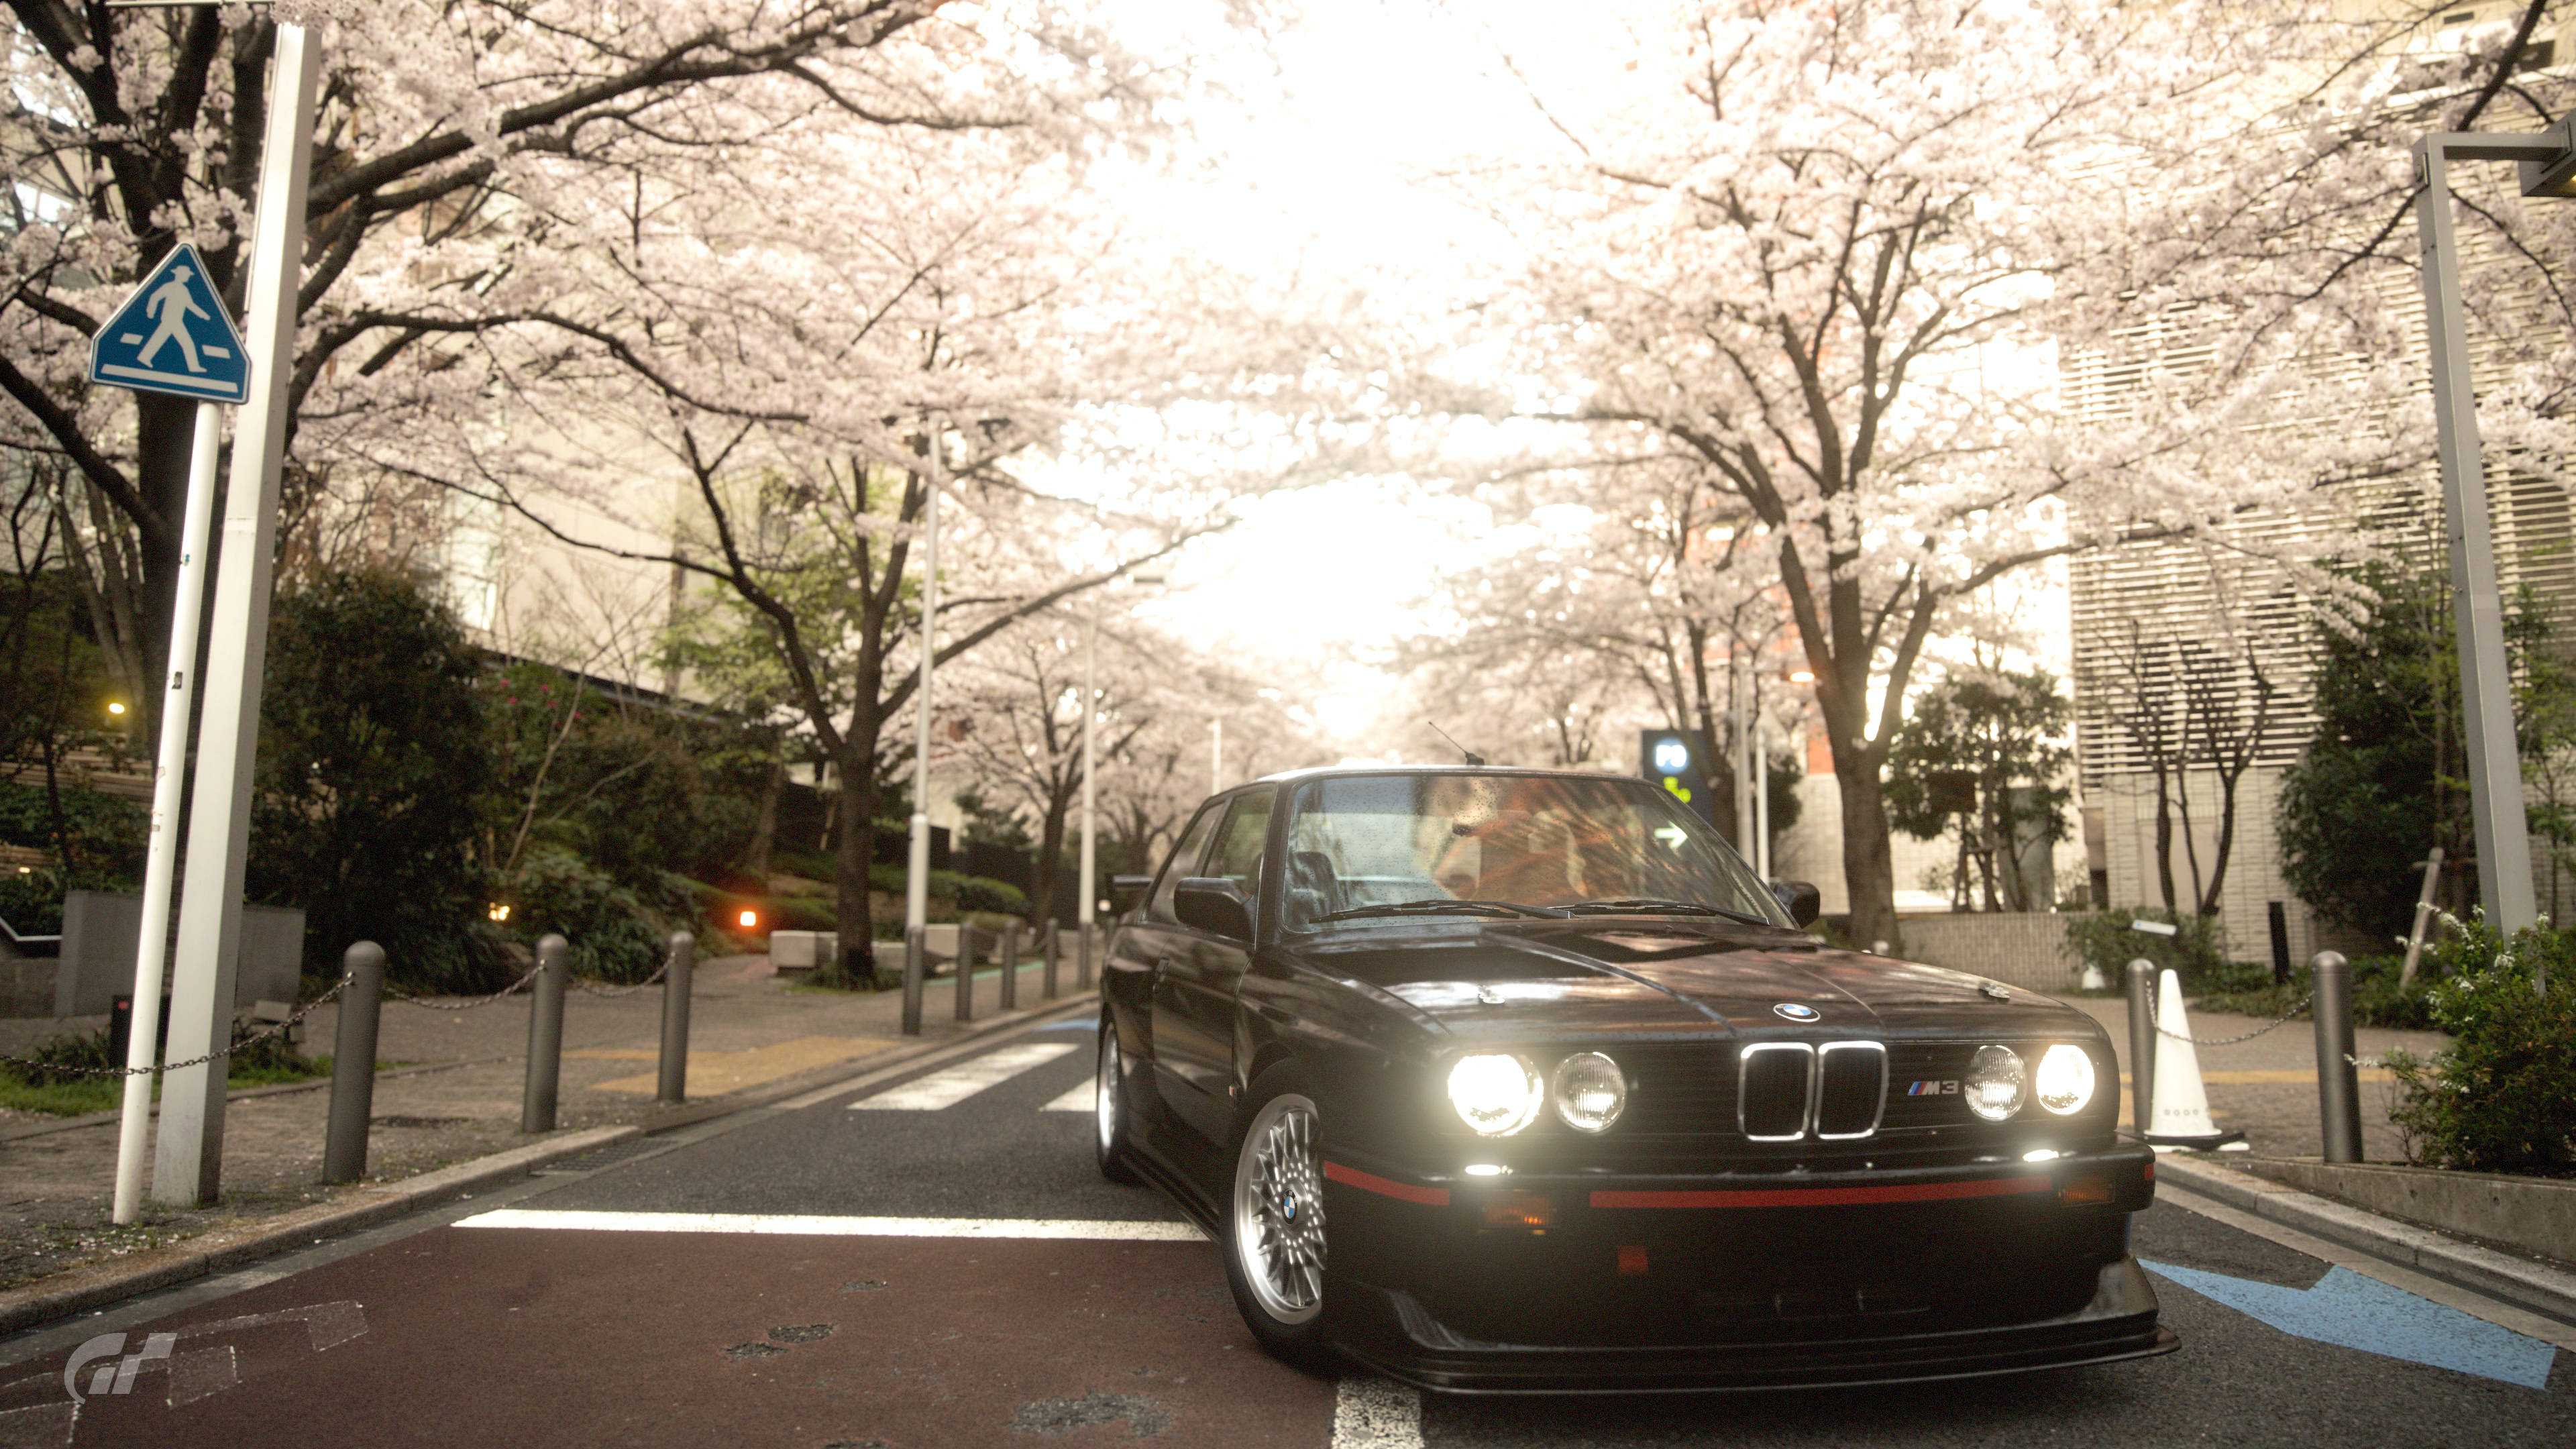 General 3840x2160 car vehicle Japan spring cherry blossom BMW video games street Tokyo daylight Gran Turismo 7 frontal view headlights trees sign digital art